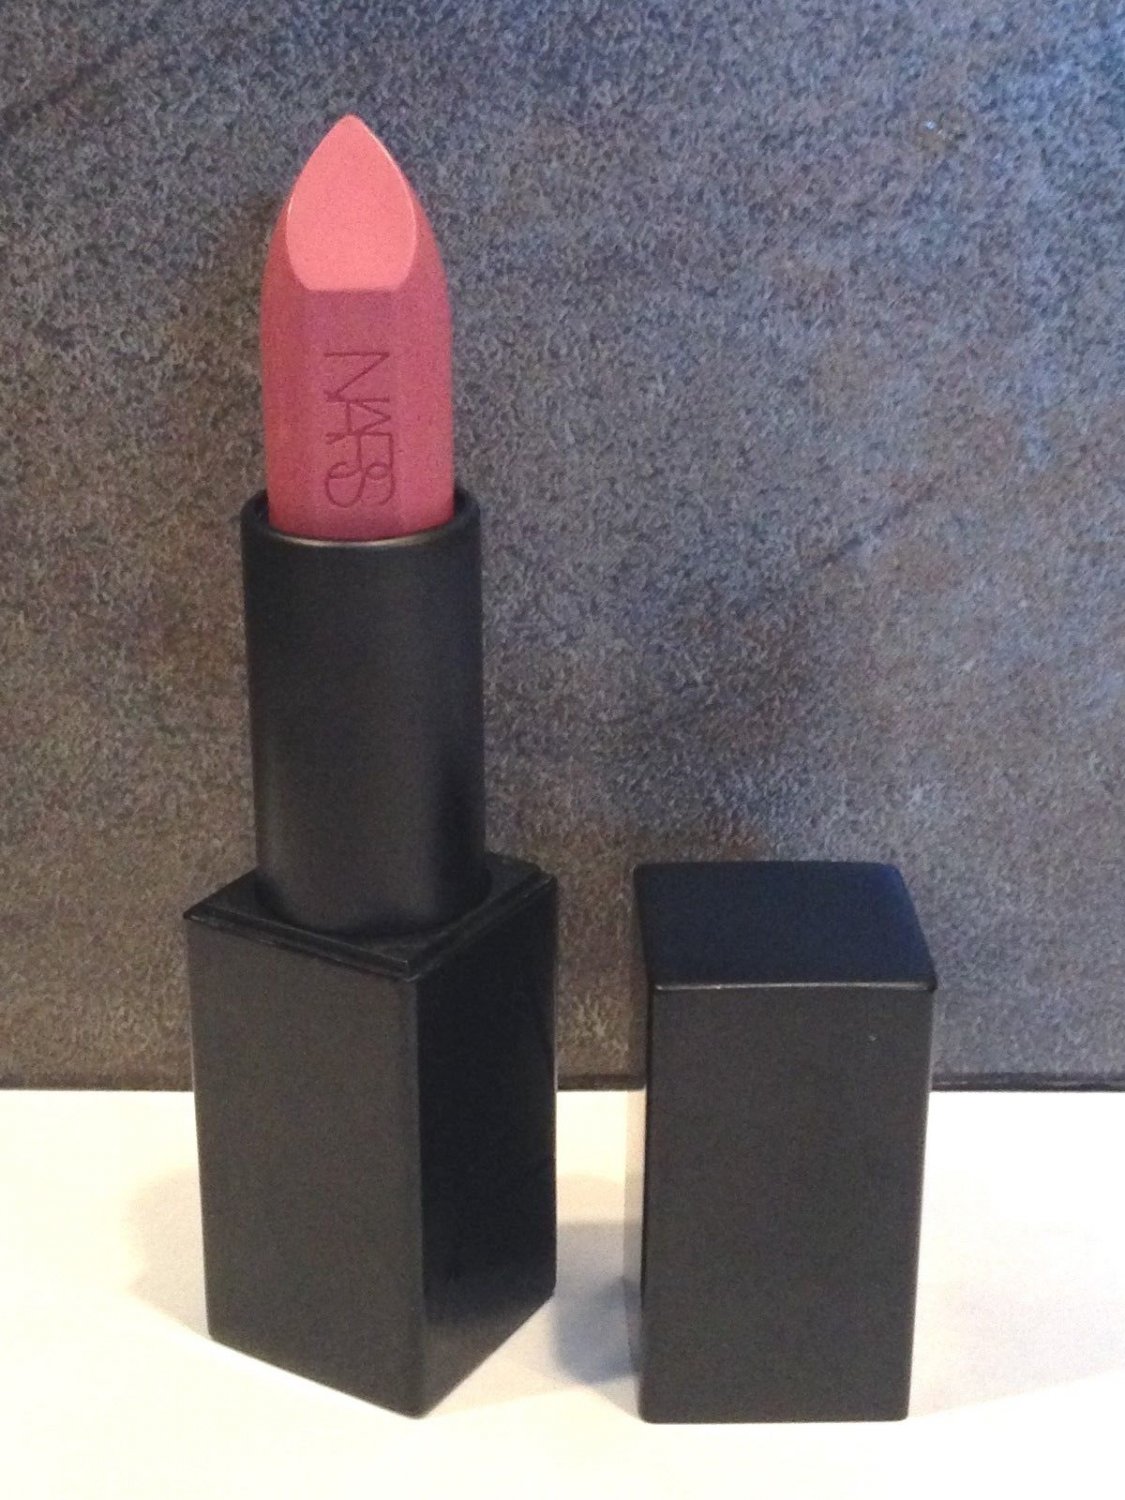 NARS Audacious Lipstick - Raquel (Nude Pink Beige)